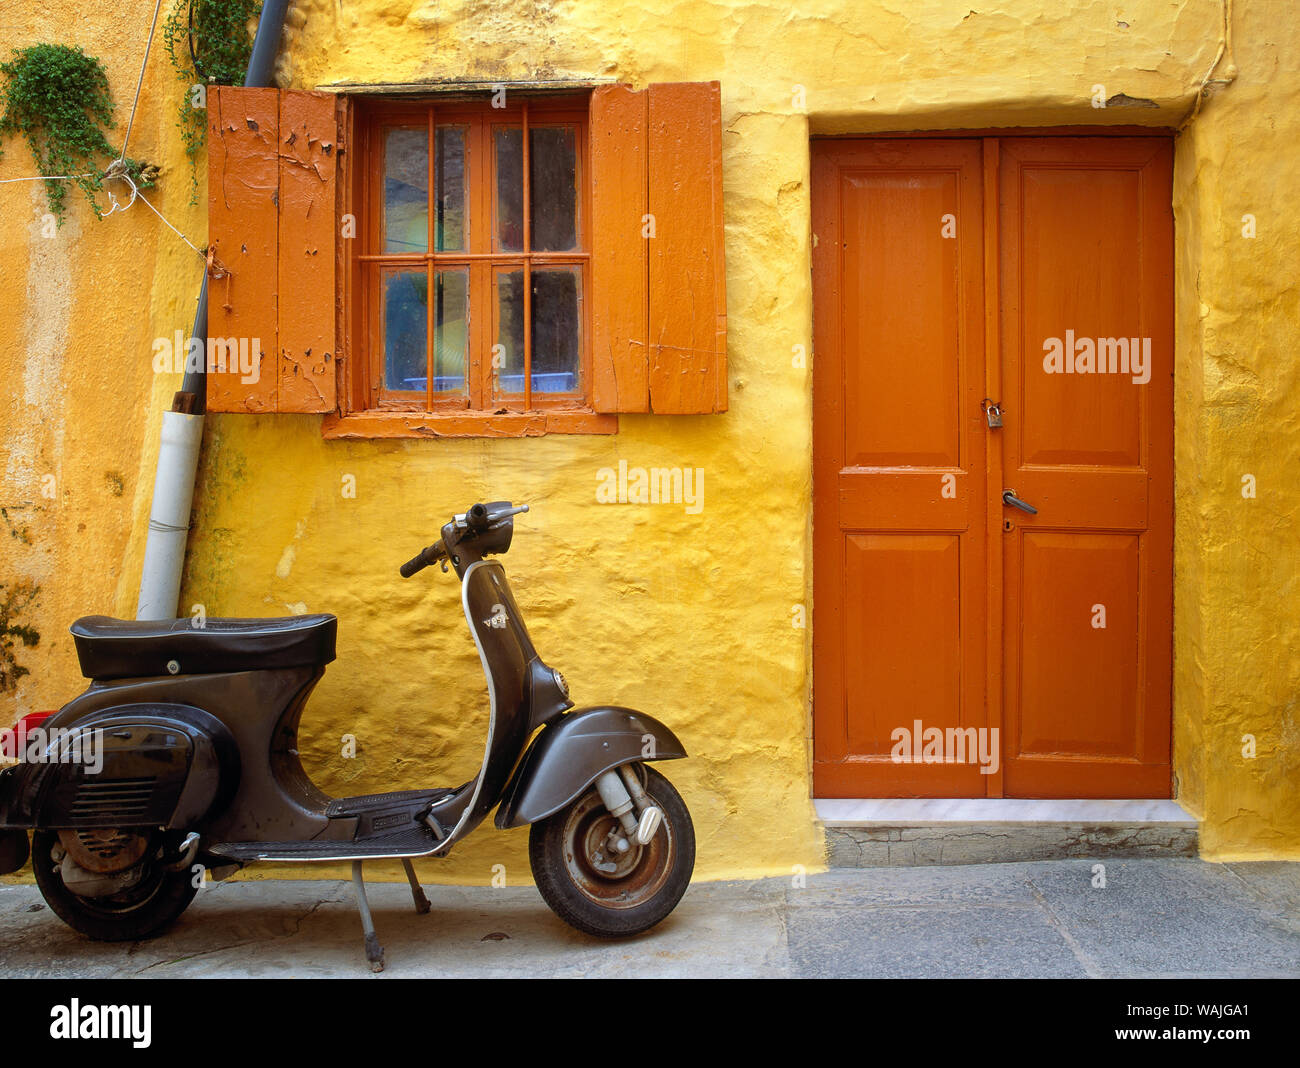 Griechenland, Rhodos. Vespa Motorrad und das bunte Haus außen. Kredit als: Jim Nilsen/Jaynes Galerie/DanitaDelimont.com Stockfoto